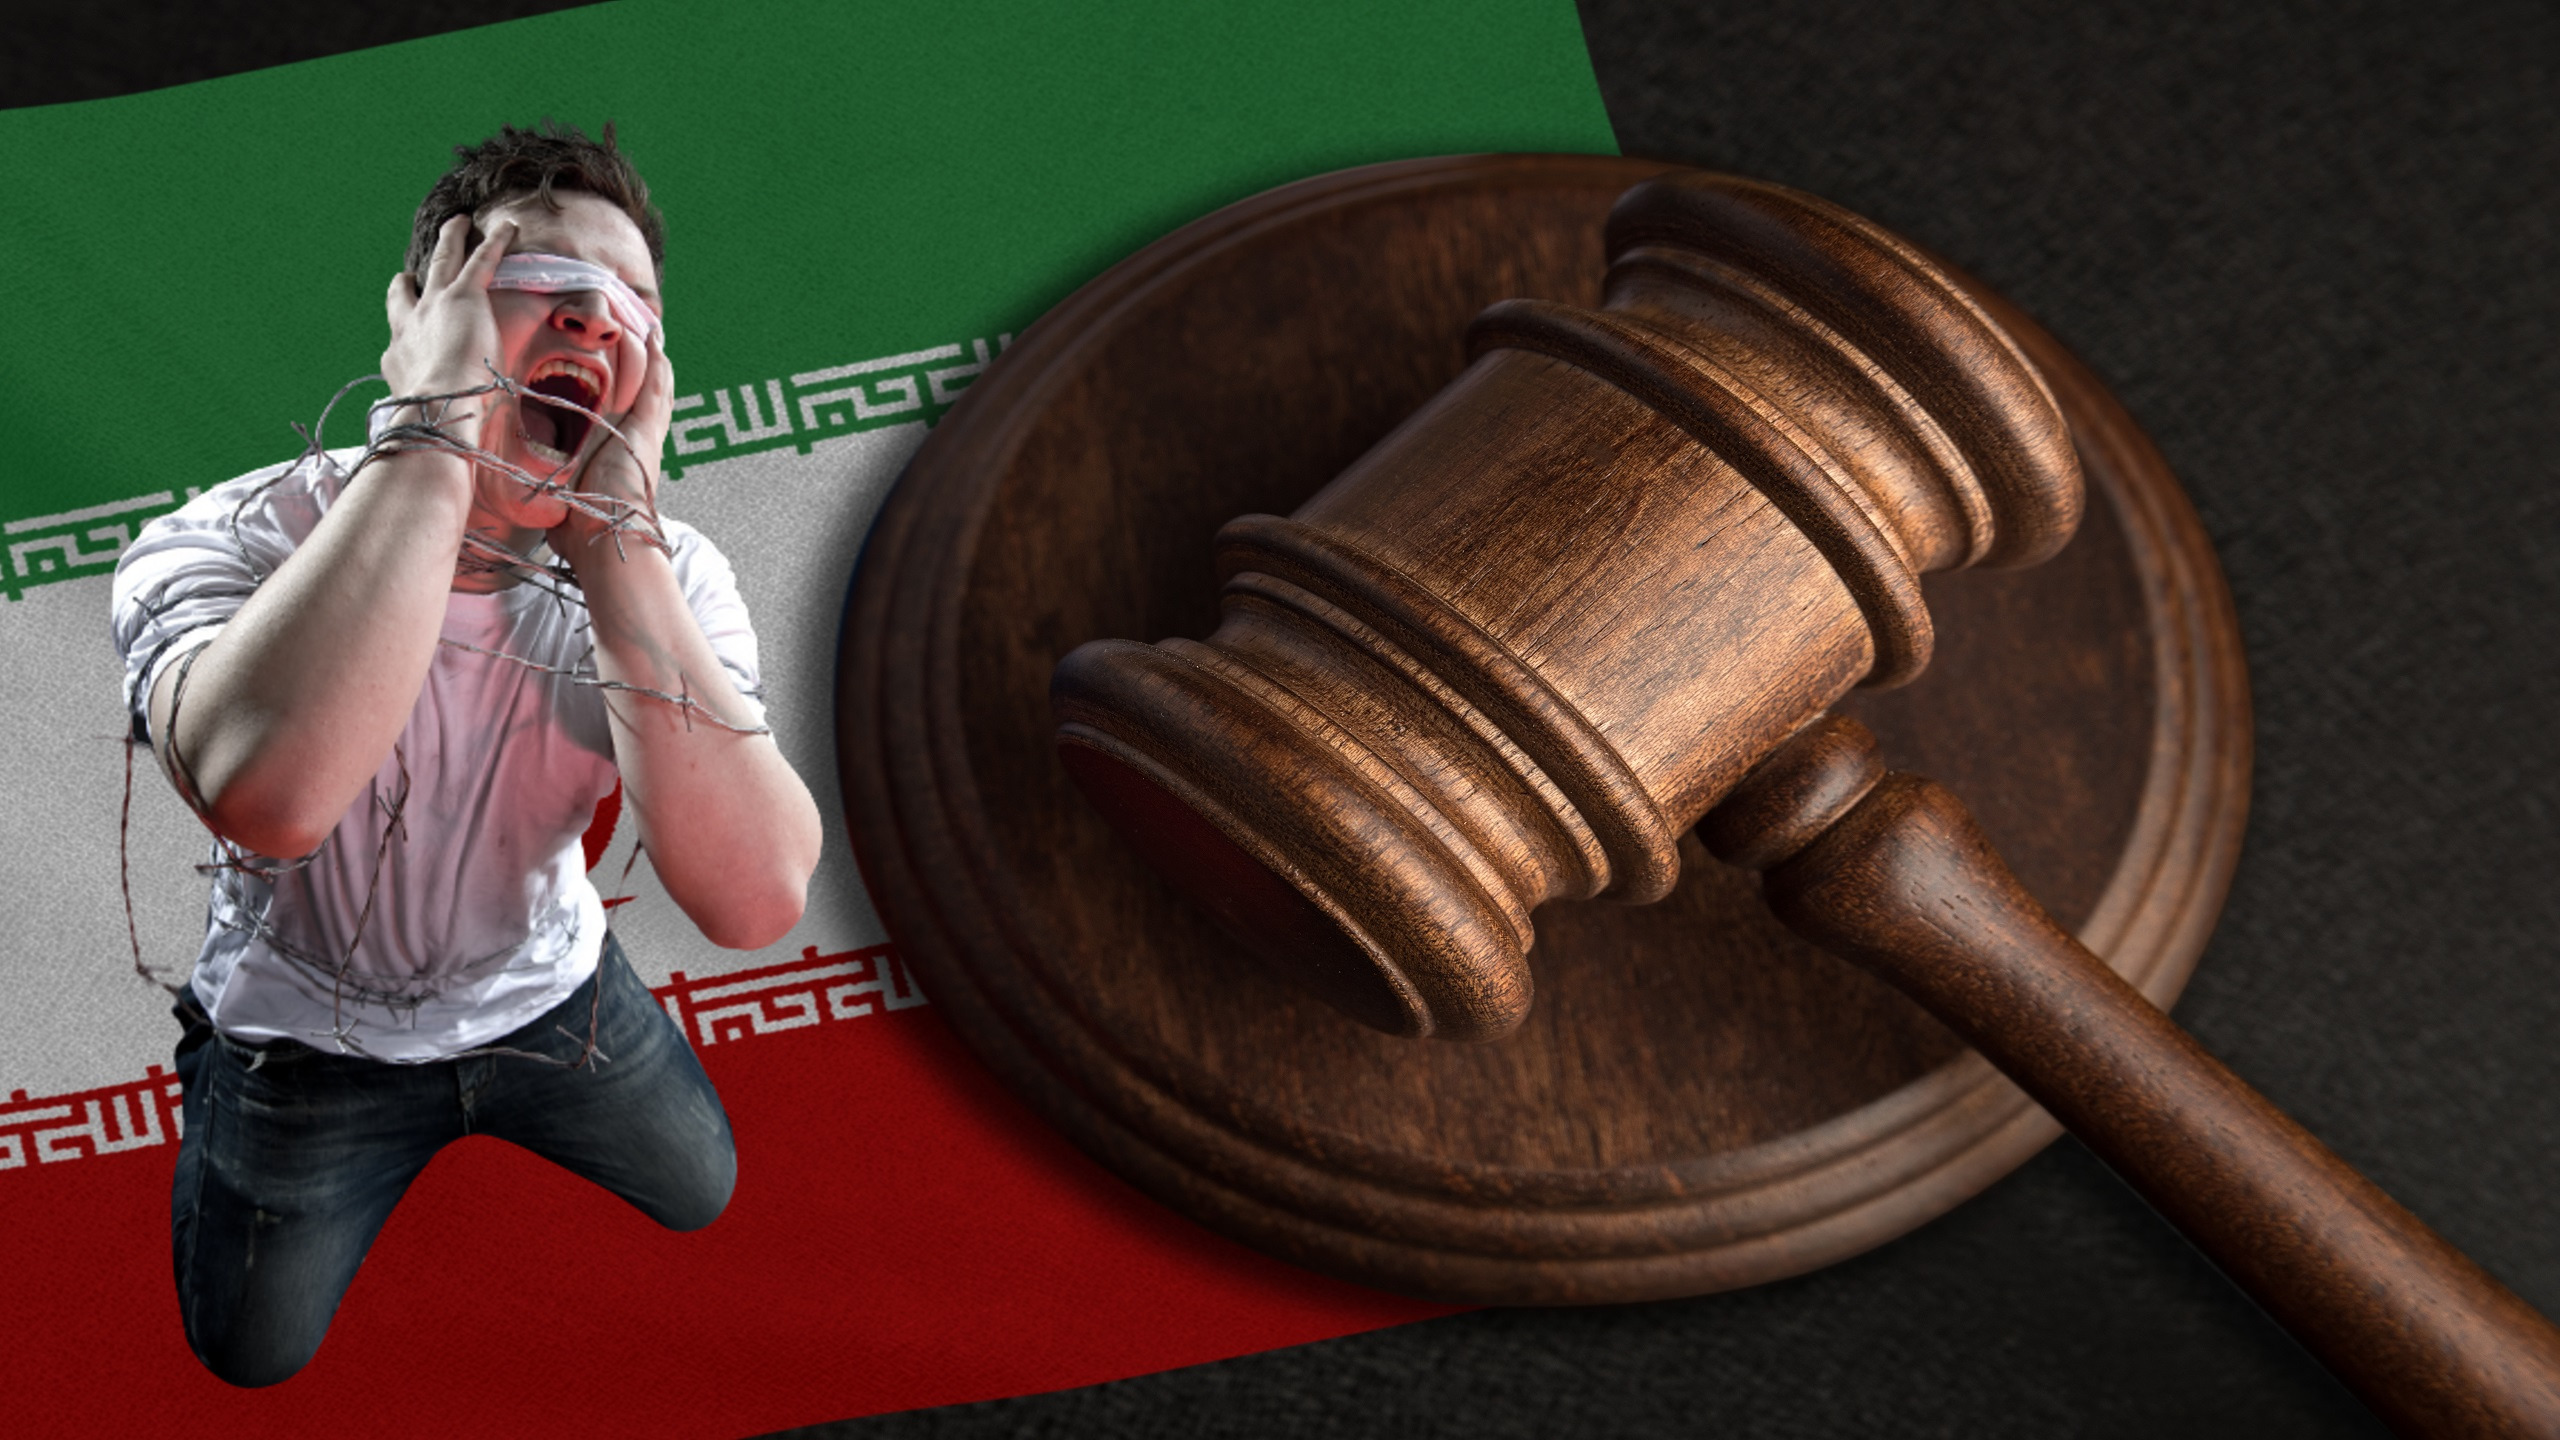 Iran to Execute Eye-for-an-Eye Justice on Tehran Brawler